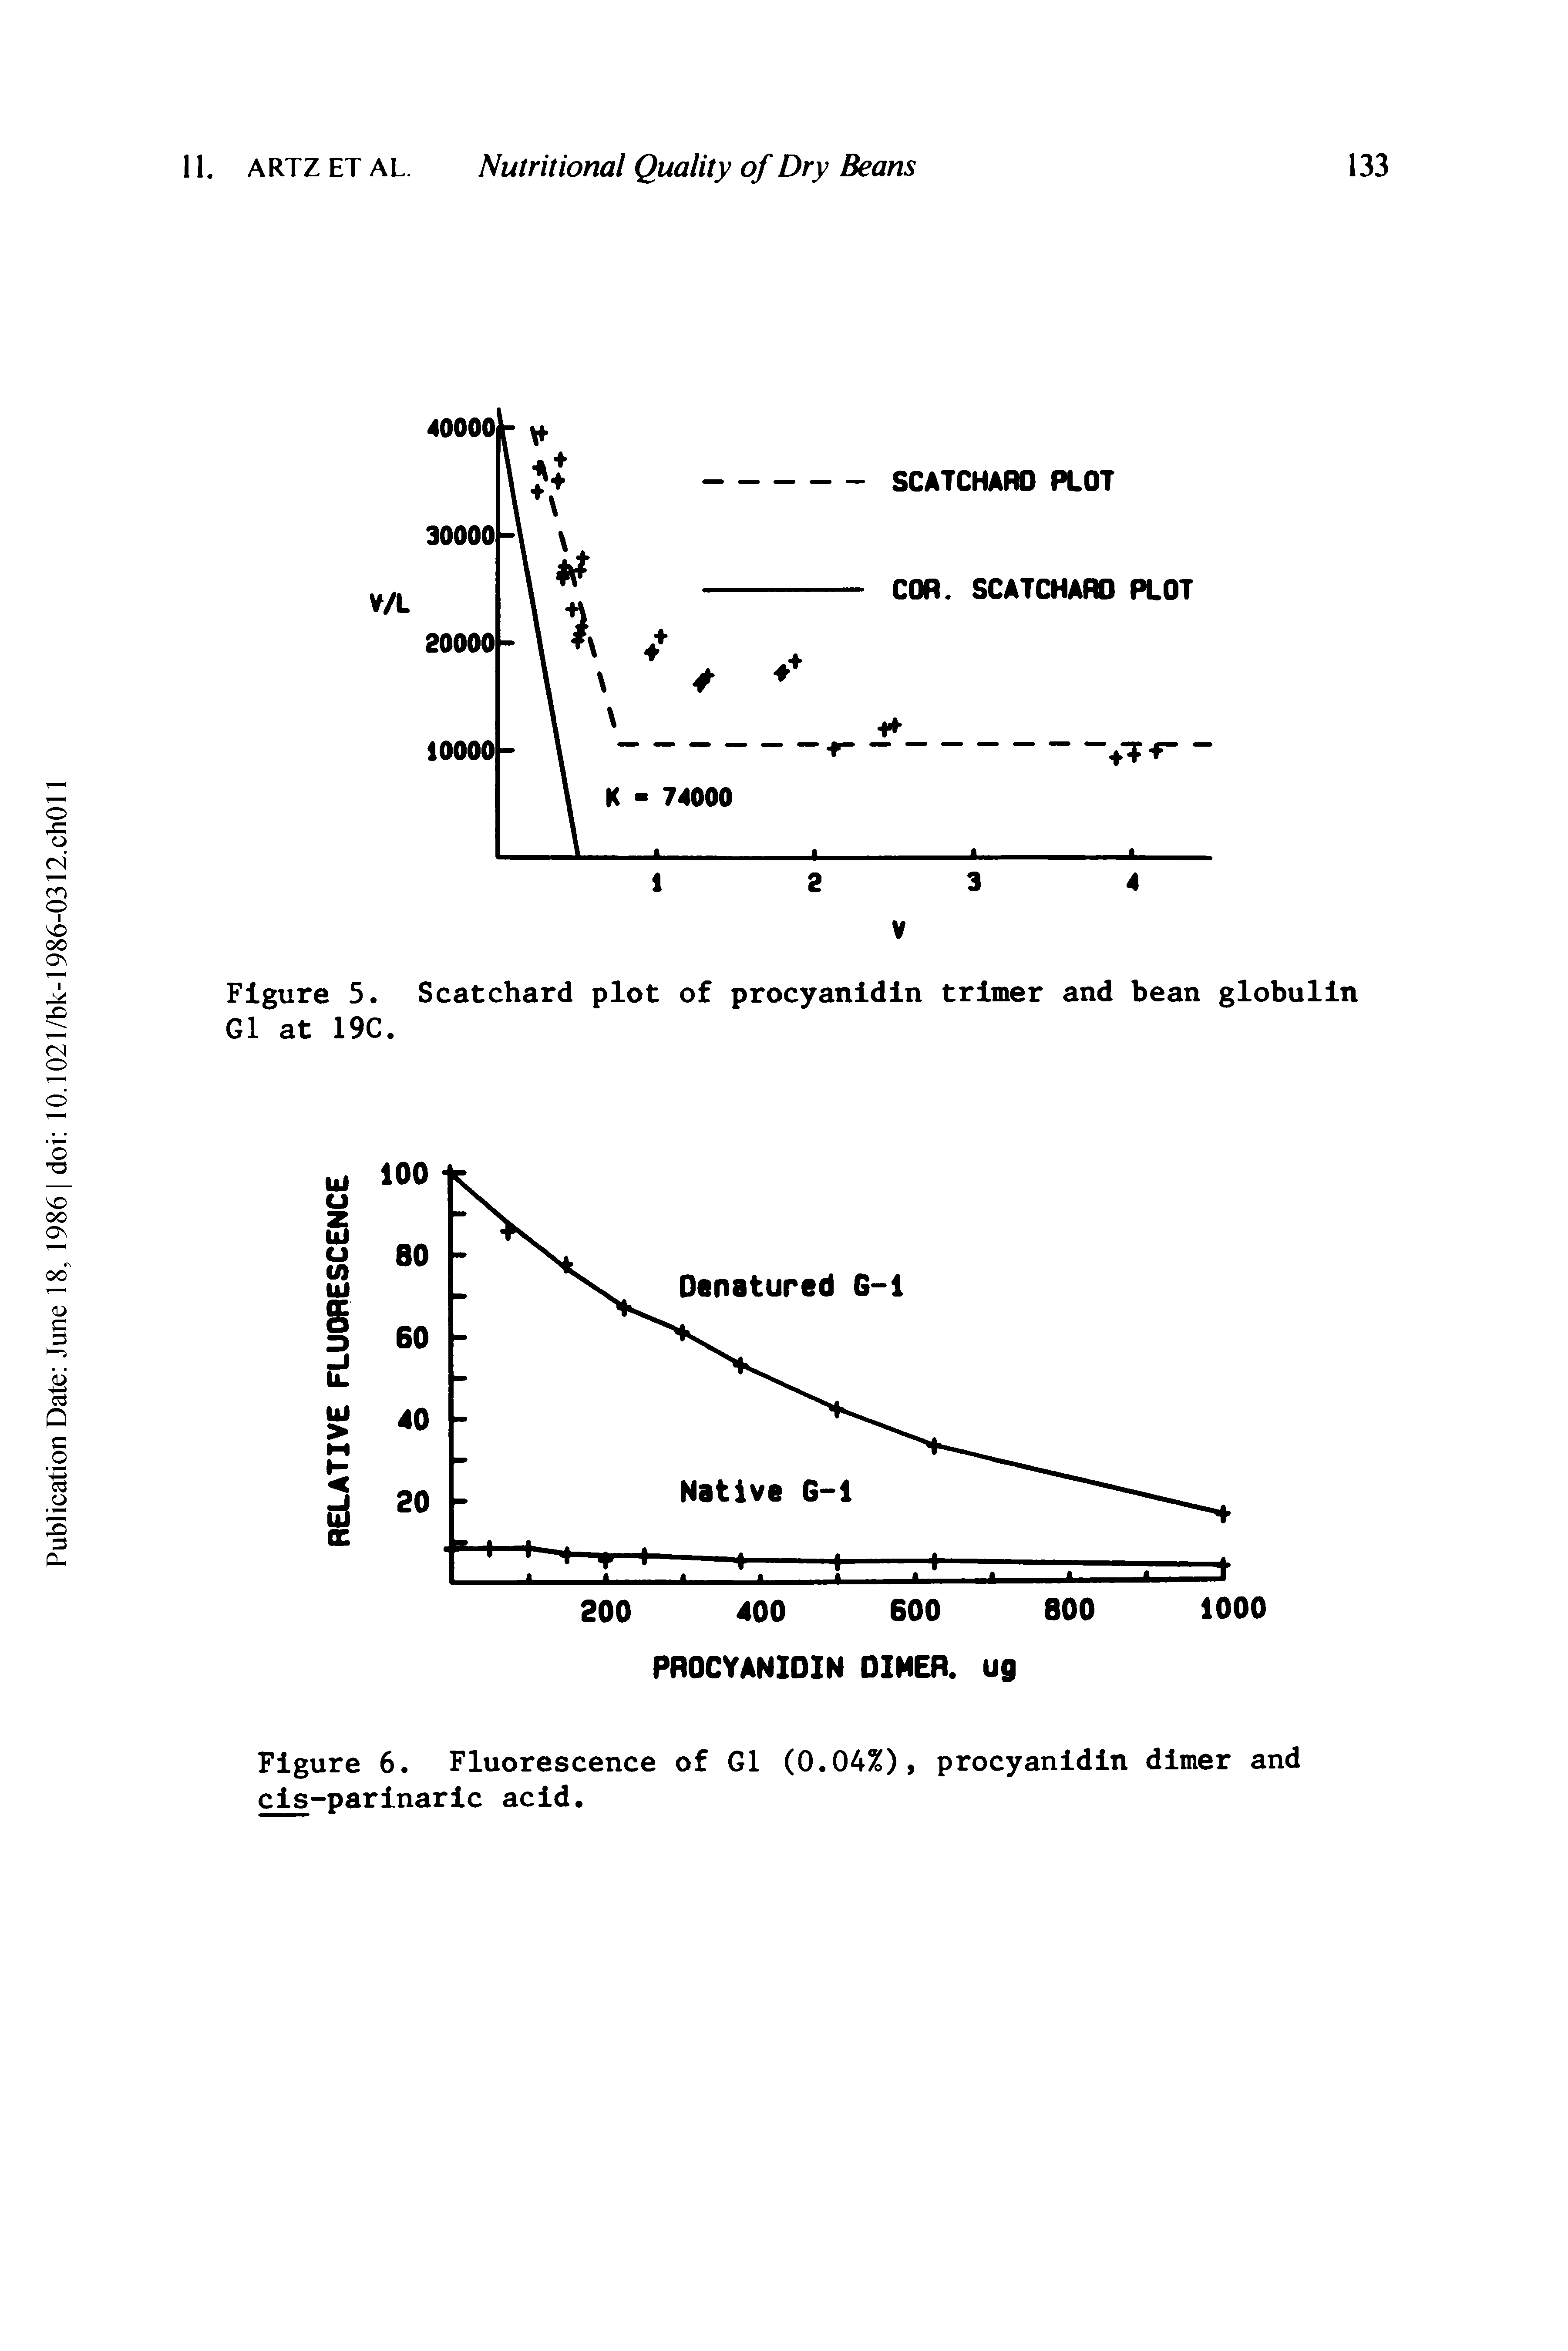 Figure 5. Scatchard plot of procyanidin trimer and bean globulin G1 at 19C.